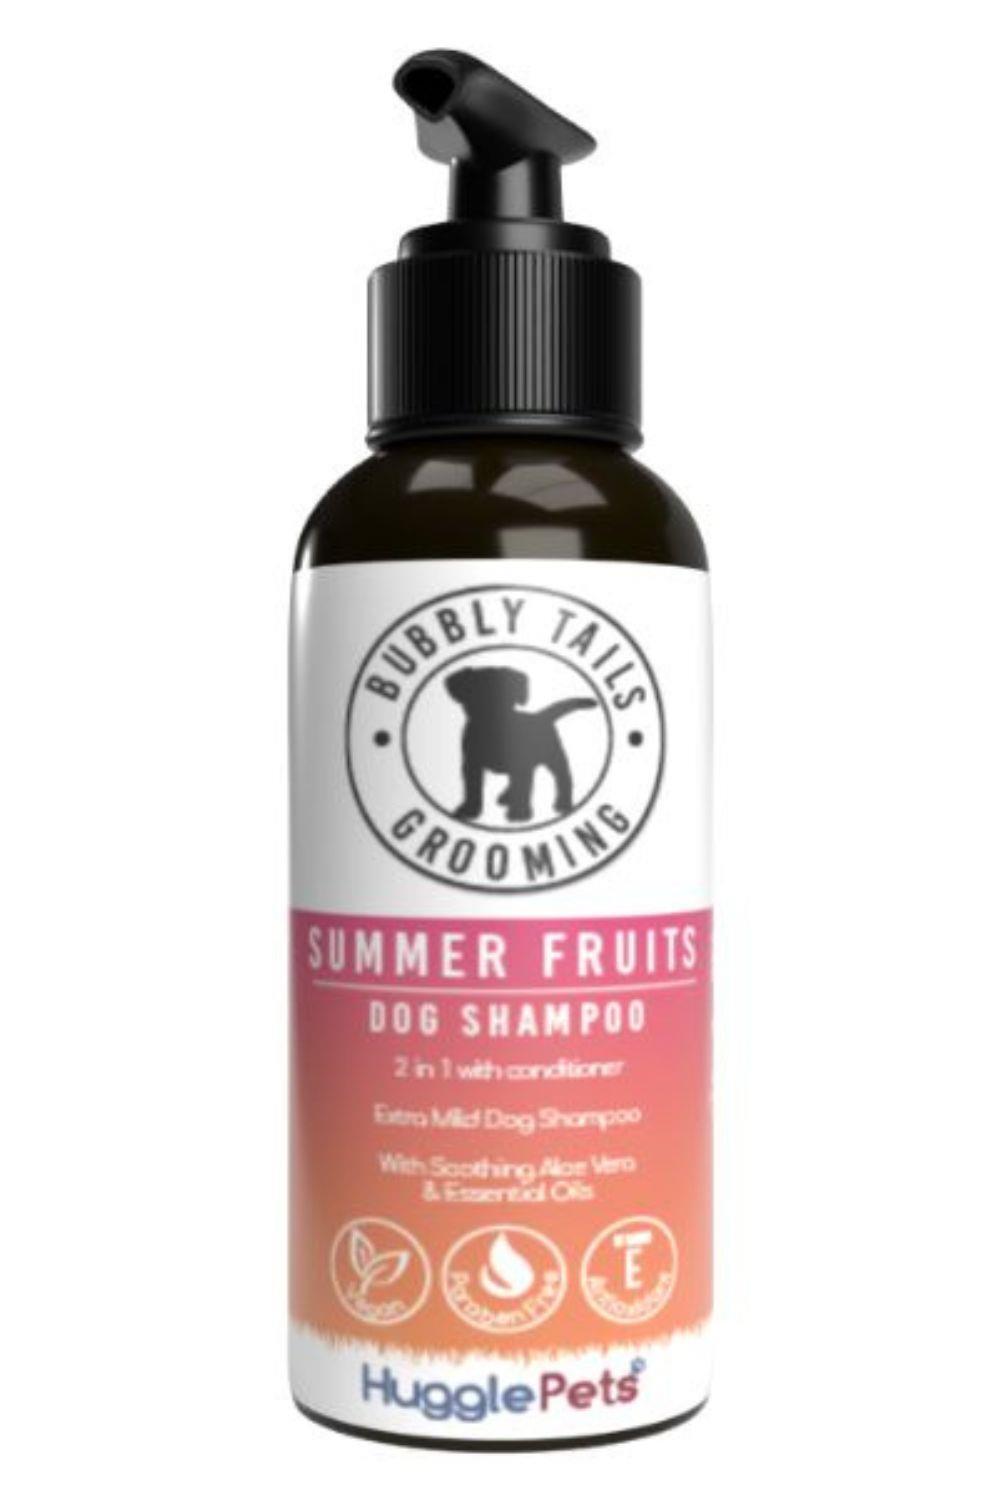 HUGGLEPETS HugglePets Bubbly Tails Summer Fruits 2 in 1 Dog Shampoo